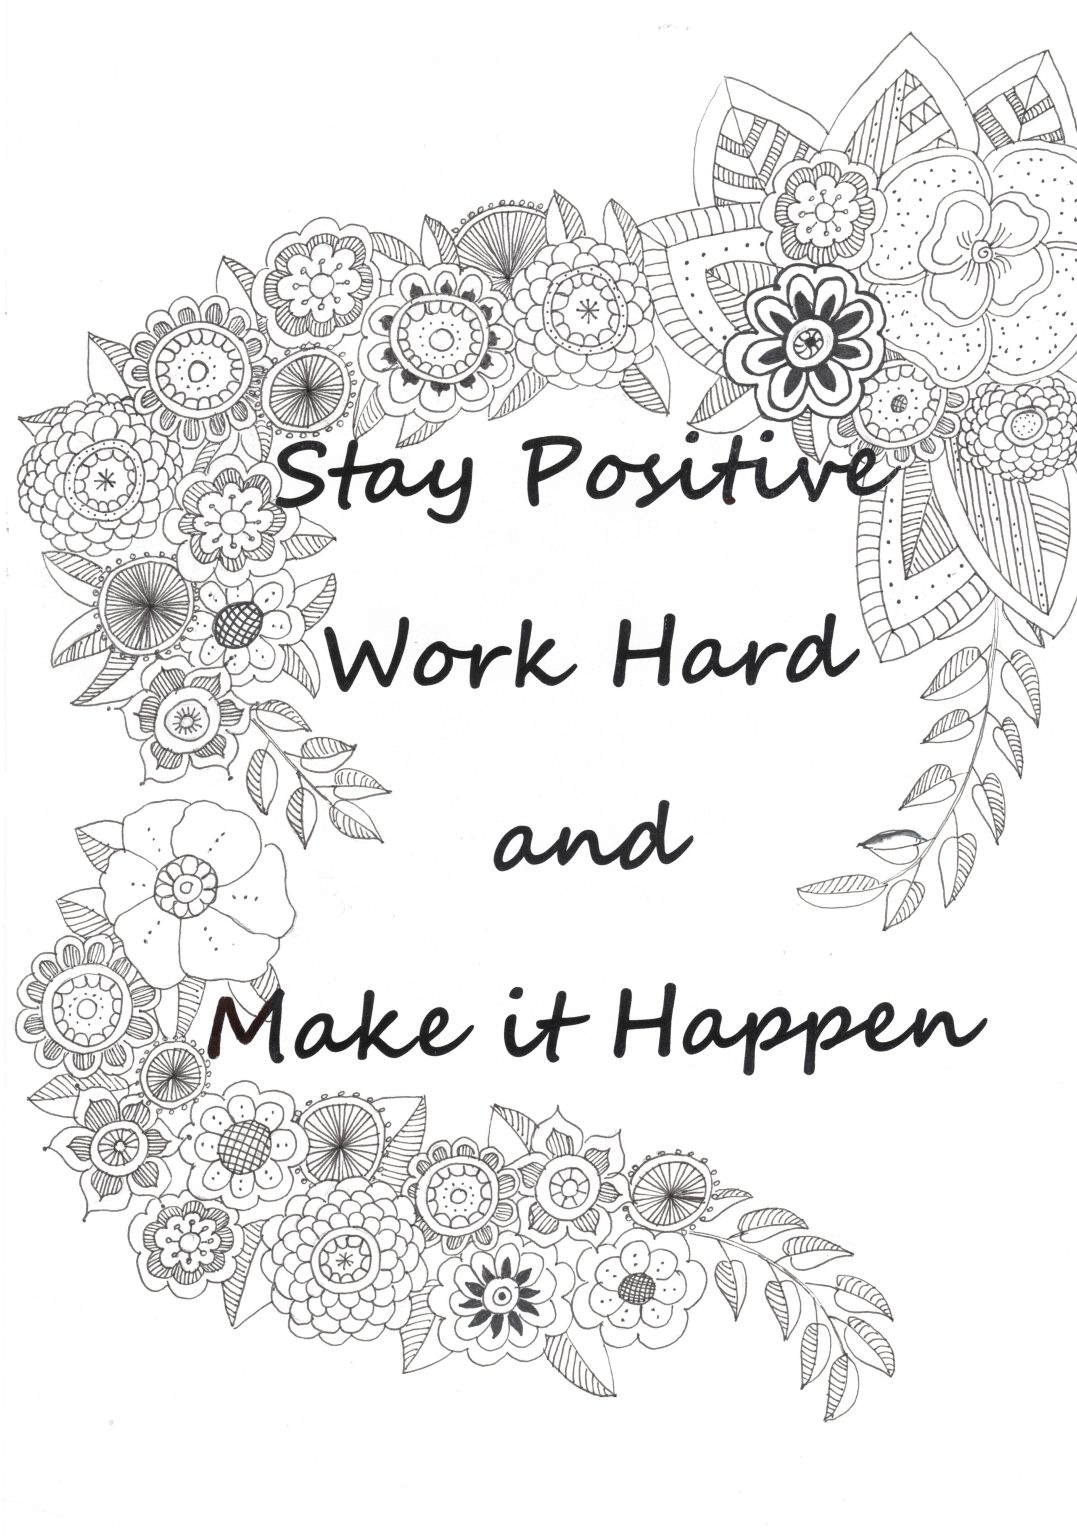 Stay positive work hard